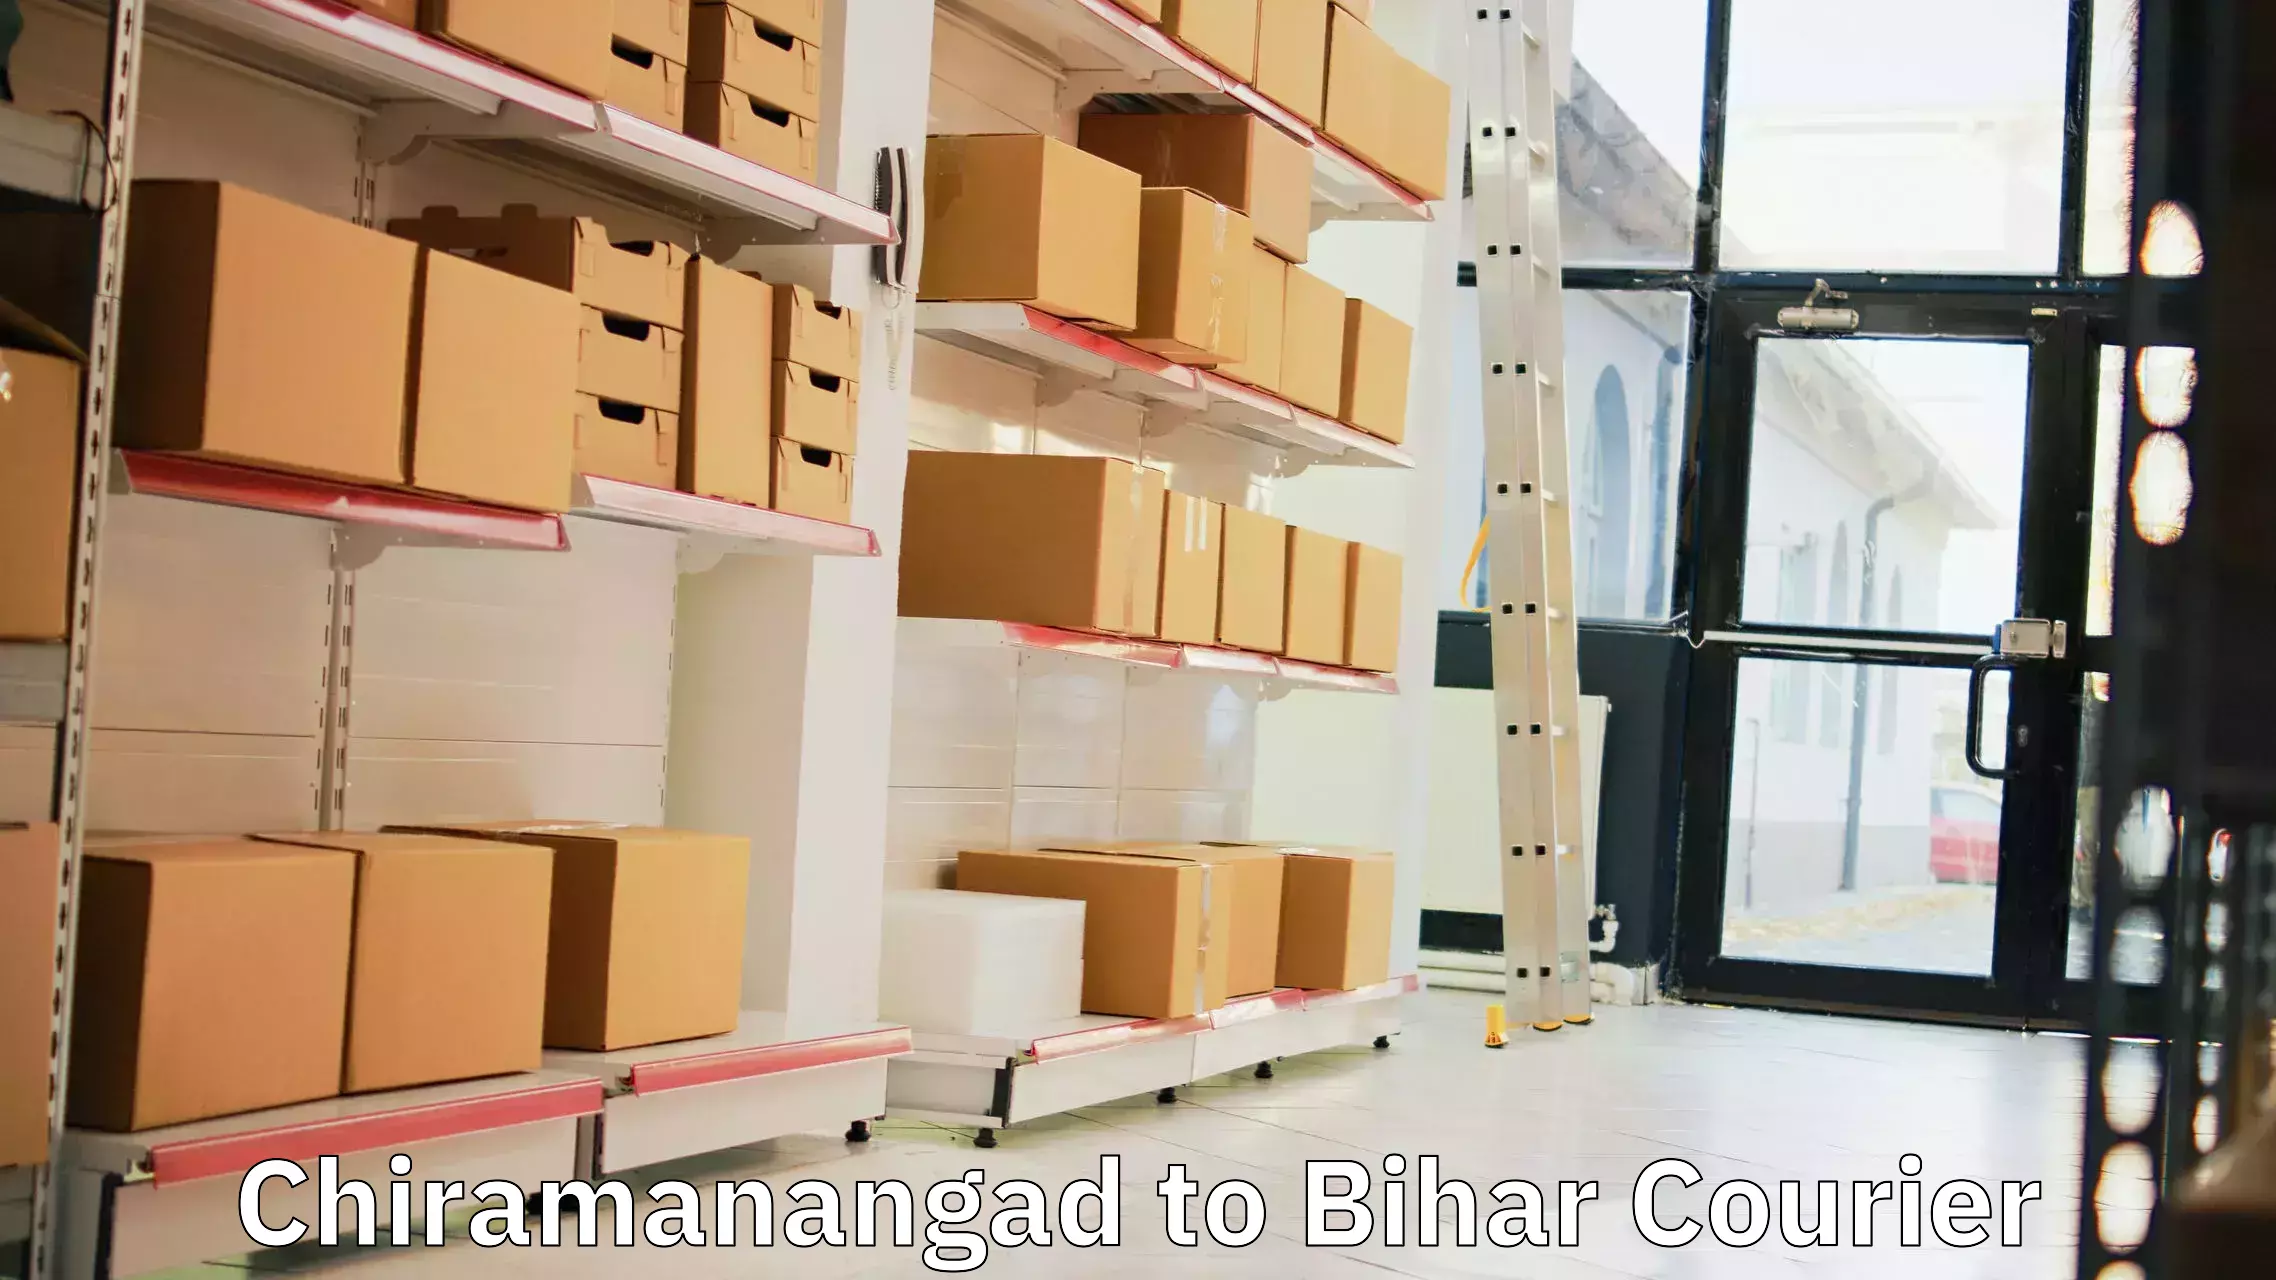 Cash on delivery service Chiramanangad to Bihar